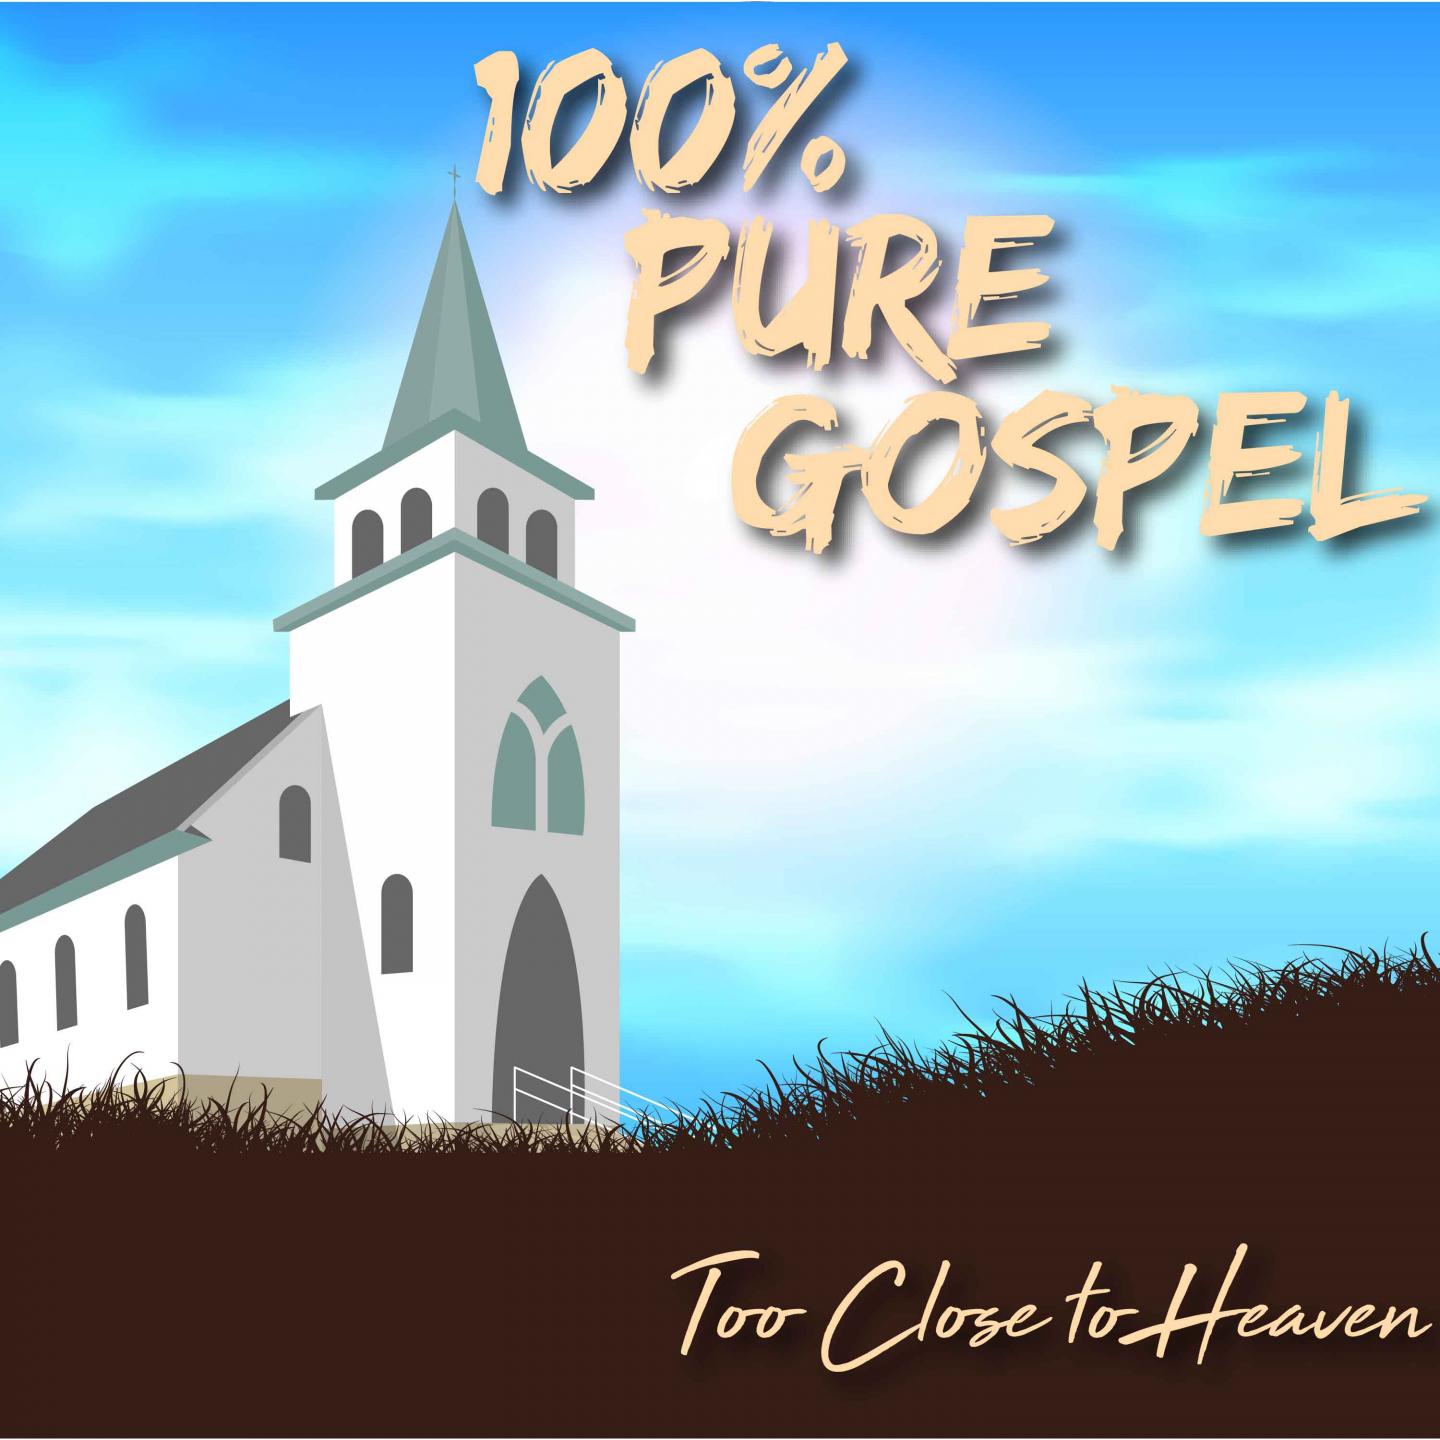 100% Pure Gospel / Too Close to Heaven